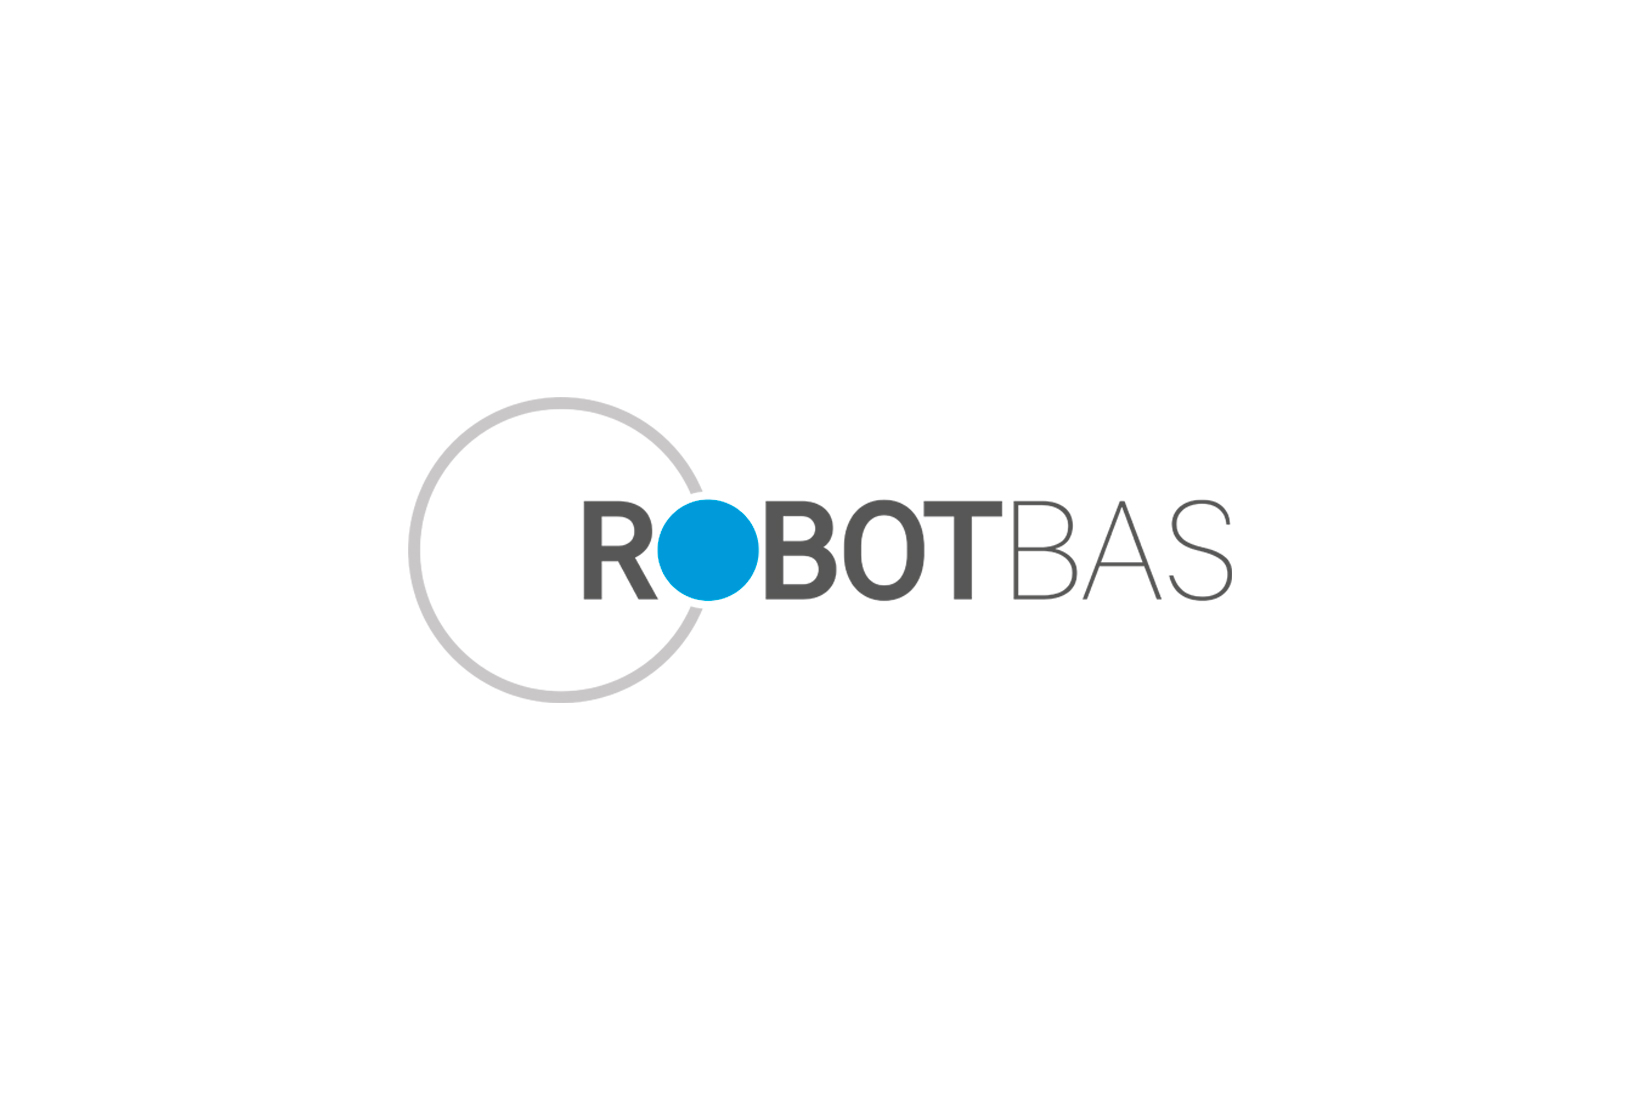 ROBOTBAS, the new brand of Robot, S.A